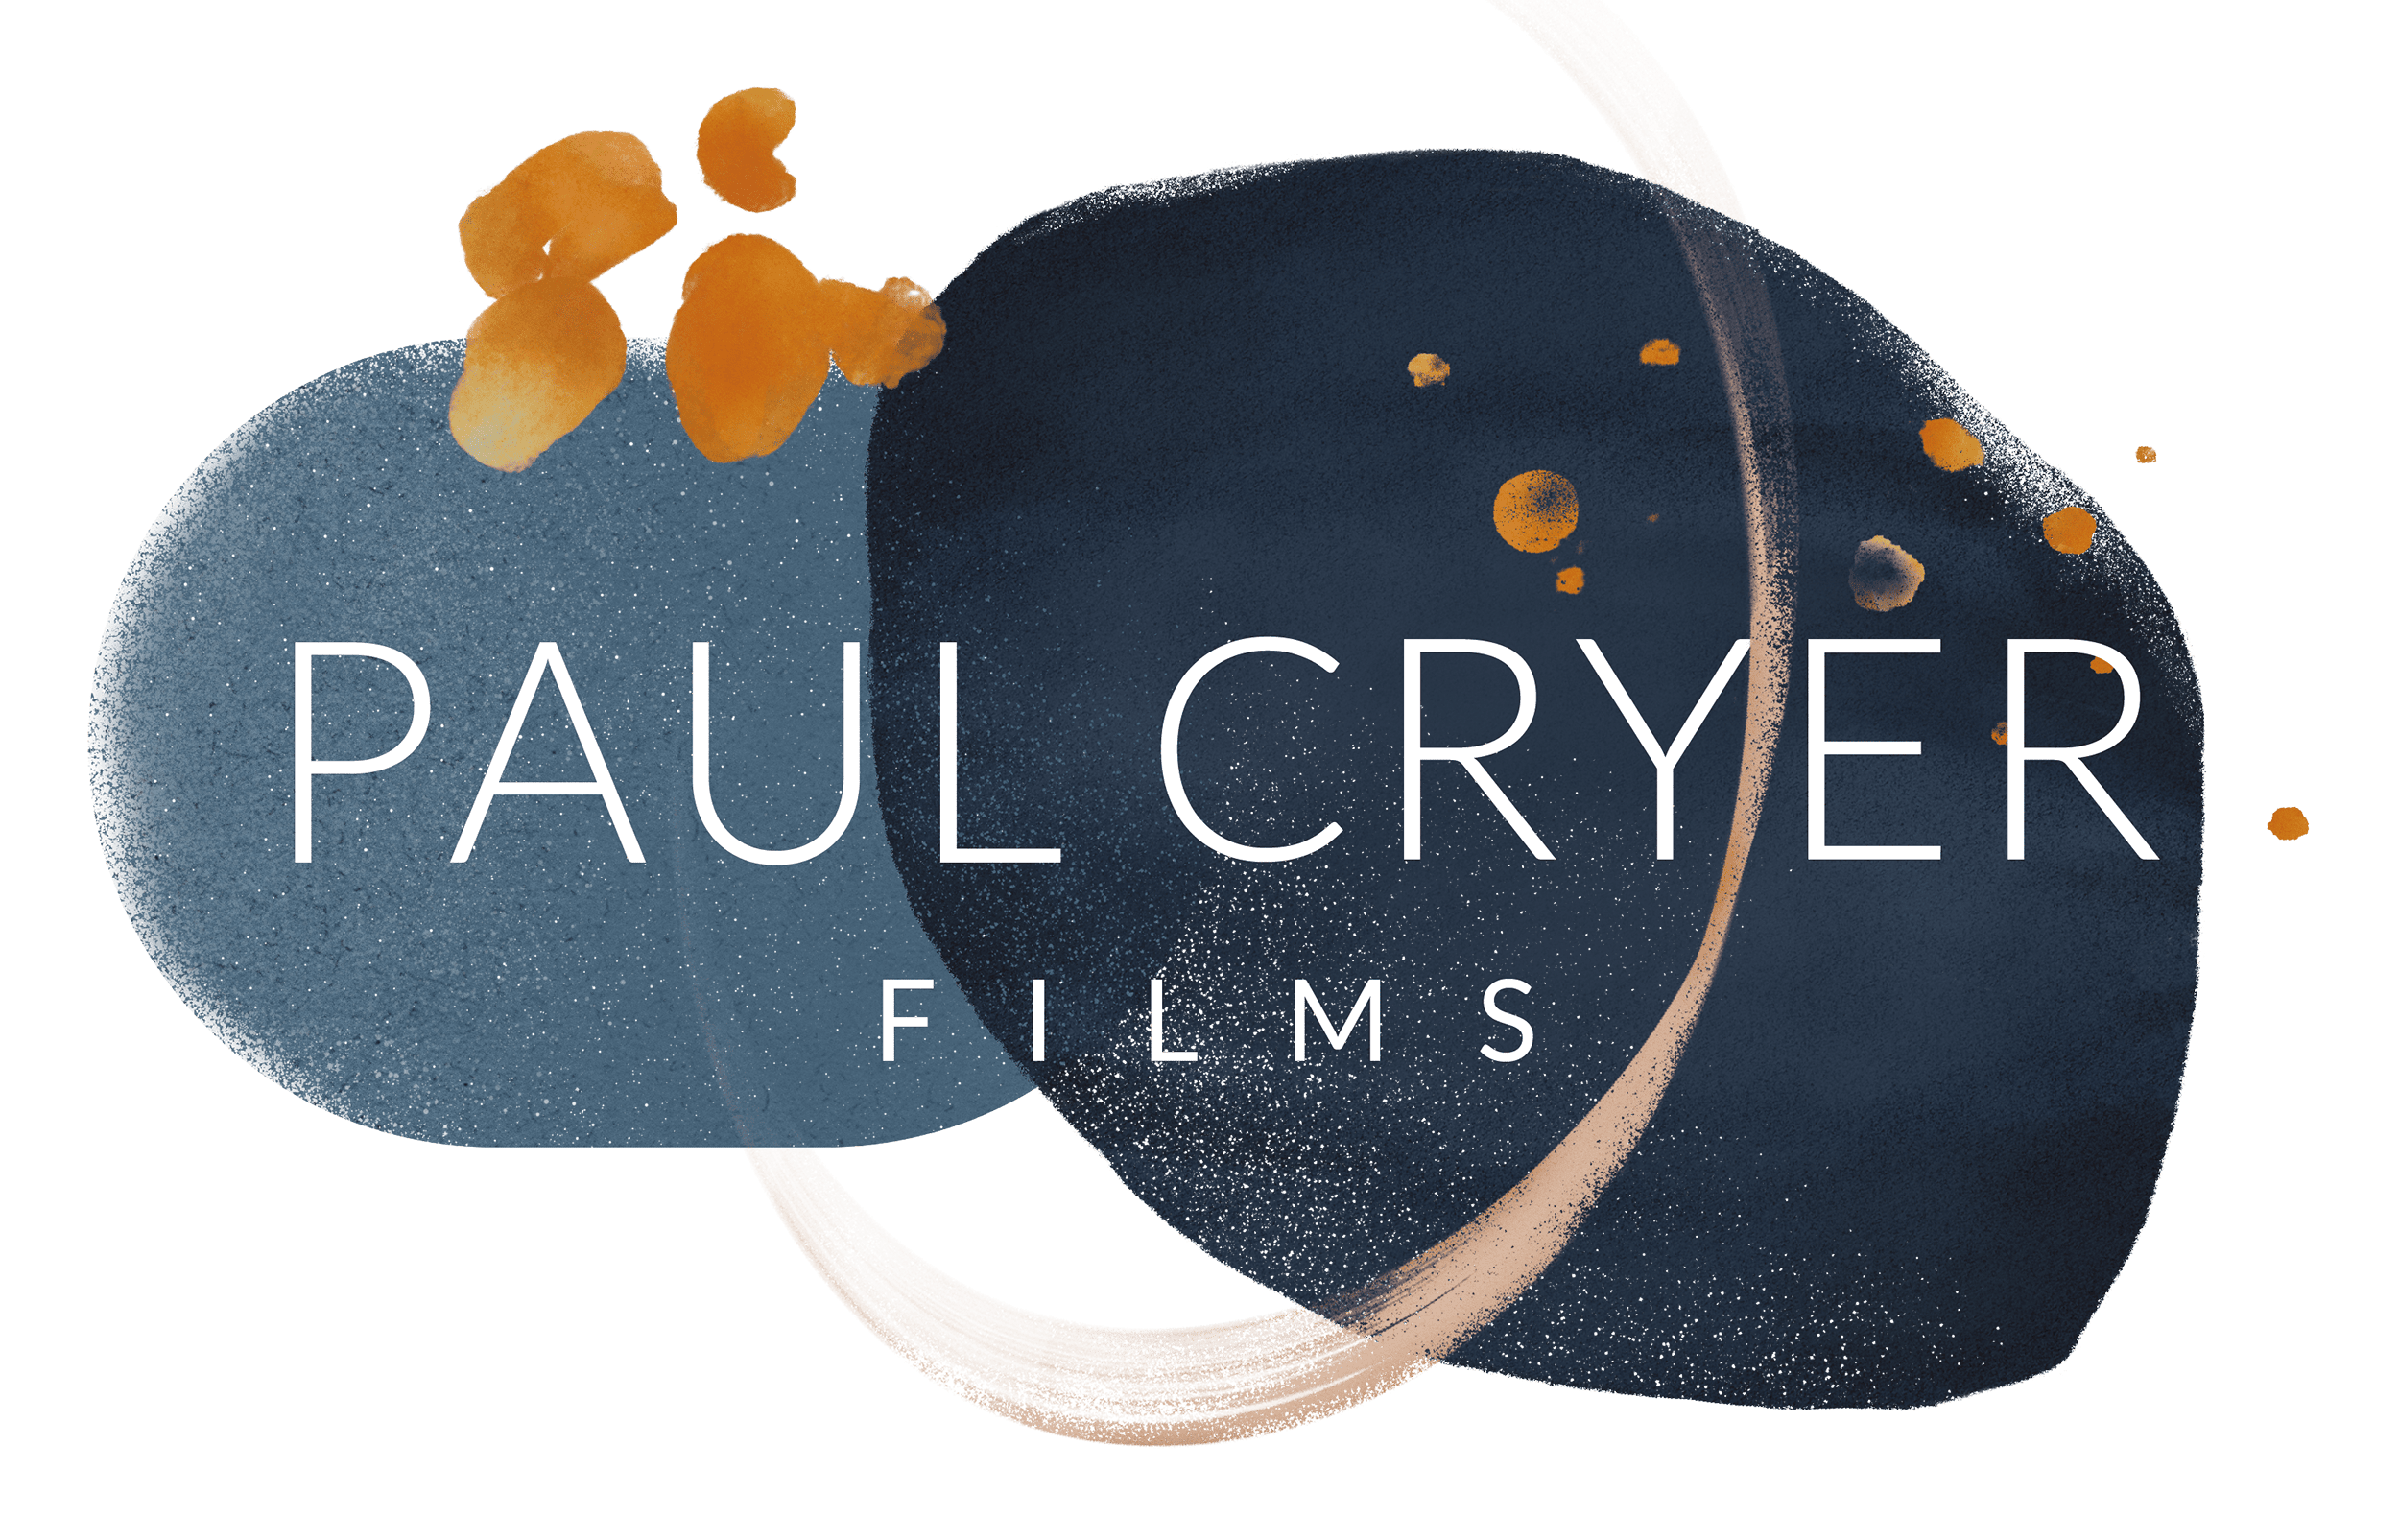 Paul Cryer Films - Artistic Modern Manchester UK Wedding Videographer - Main logo